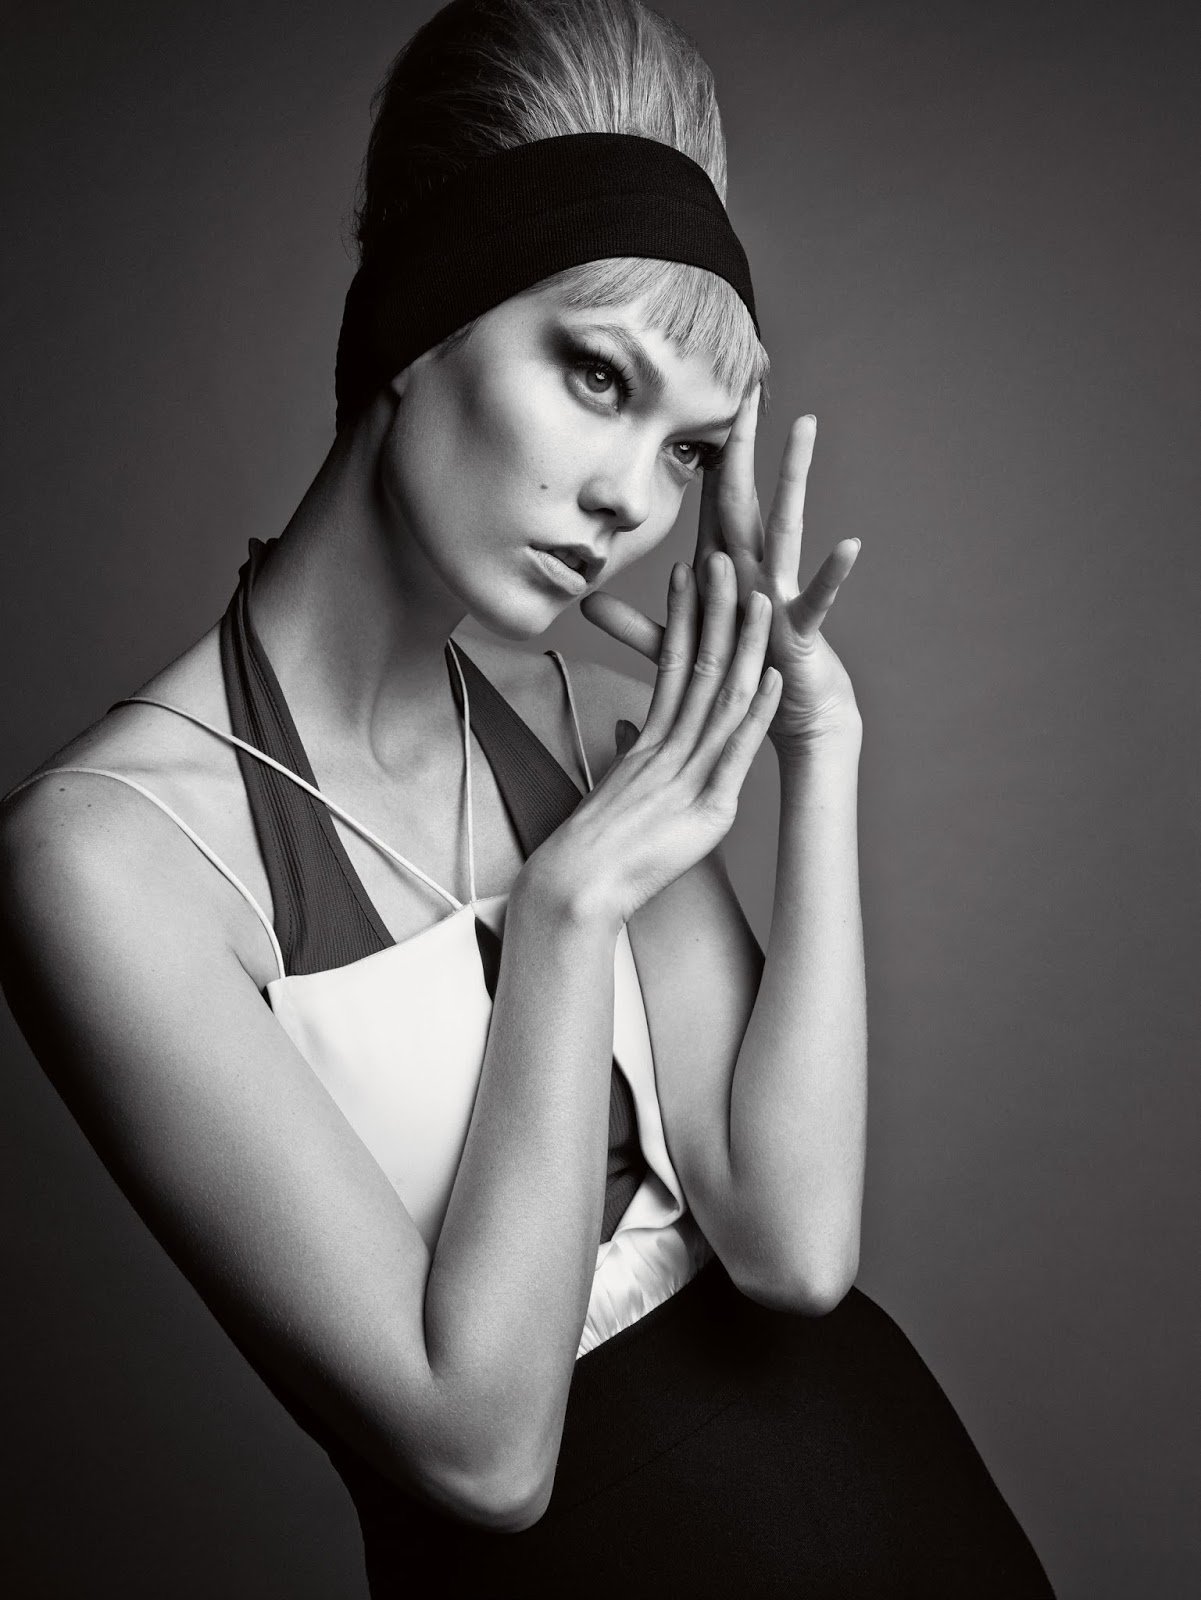 Karlie-Kloss-by-Patrick-Demarchelier-for-Vogue-UK-November-2015-5.jpg